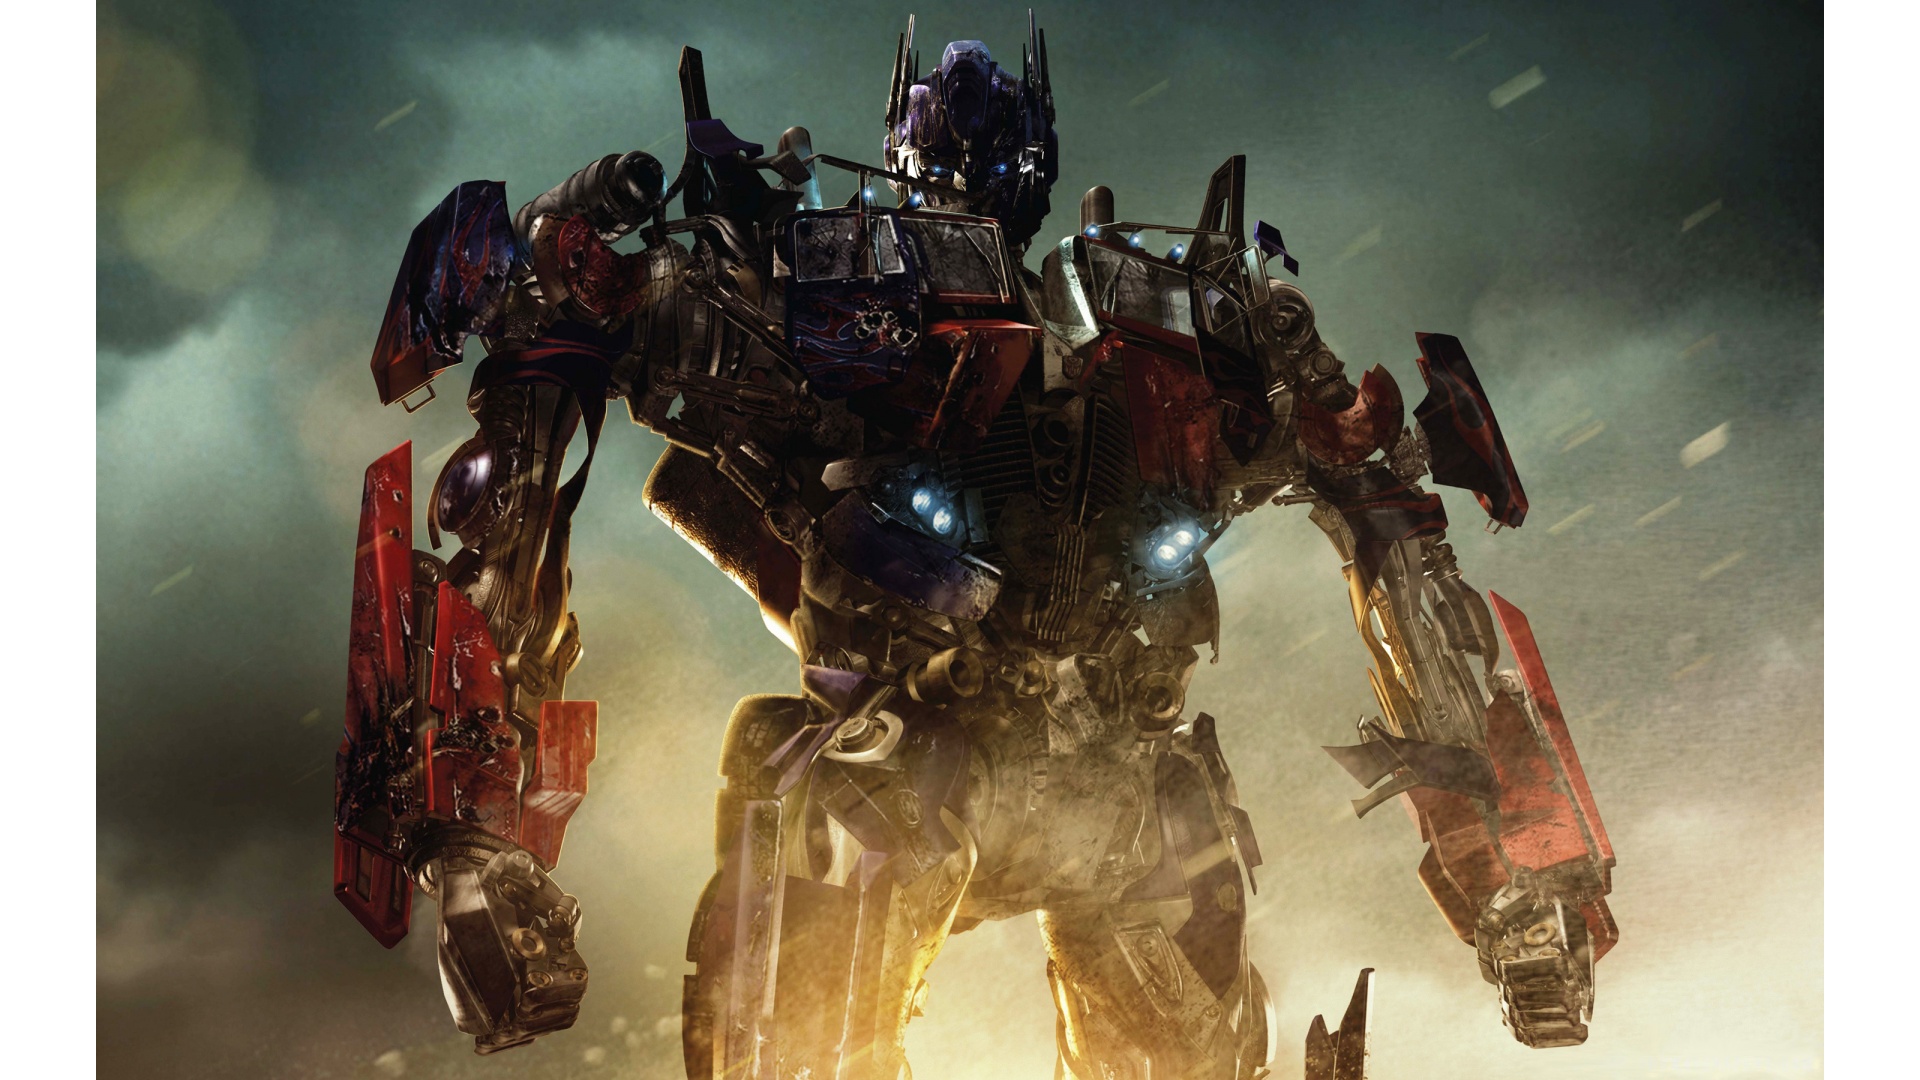  movie transformers 4 transformers film series june 2014 optimus prime 1920x1080